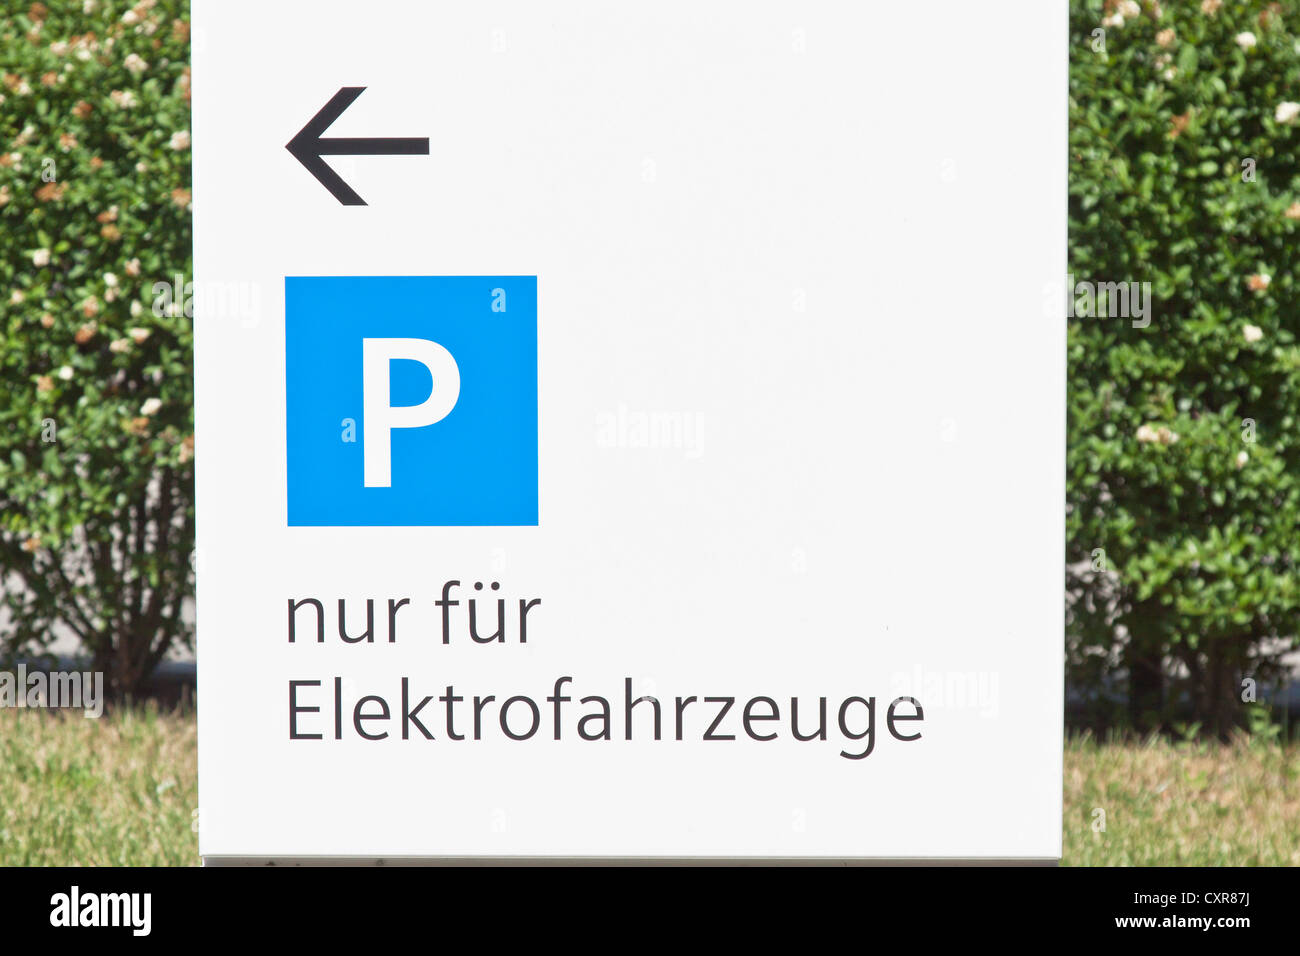 Sign, 'Parkplatz nur fuer Elektrofahrzeuge', German for 'car park only for electric vehicles' Stock Photo